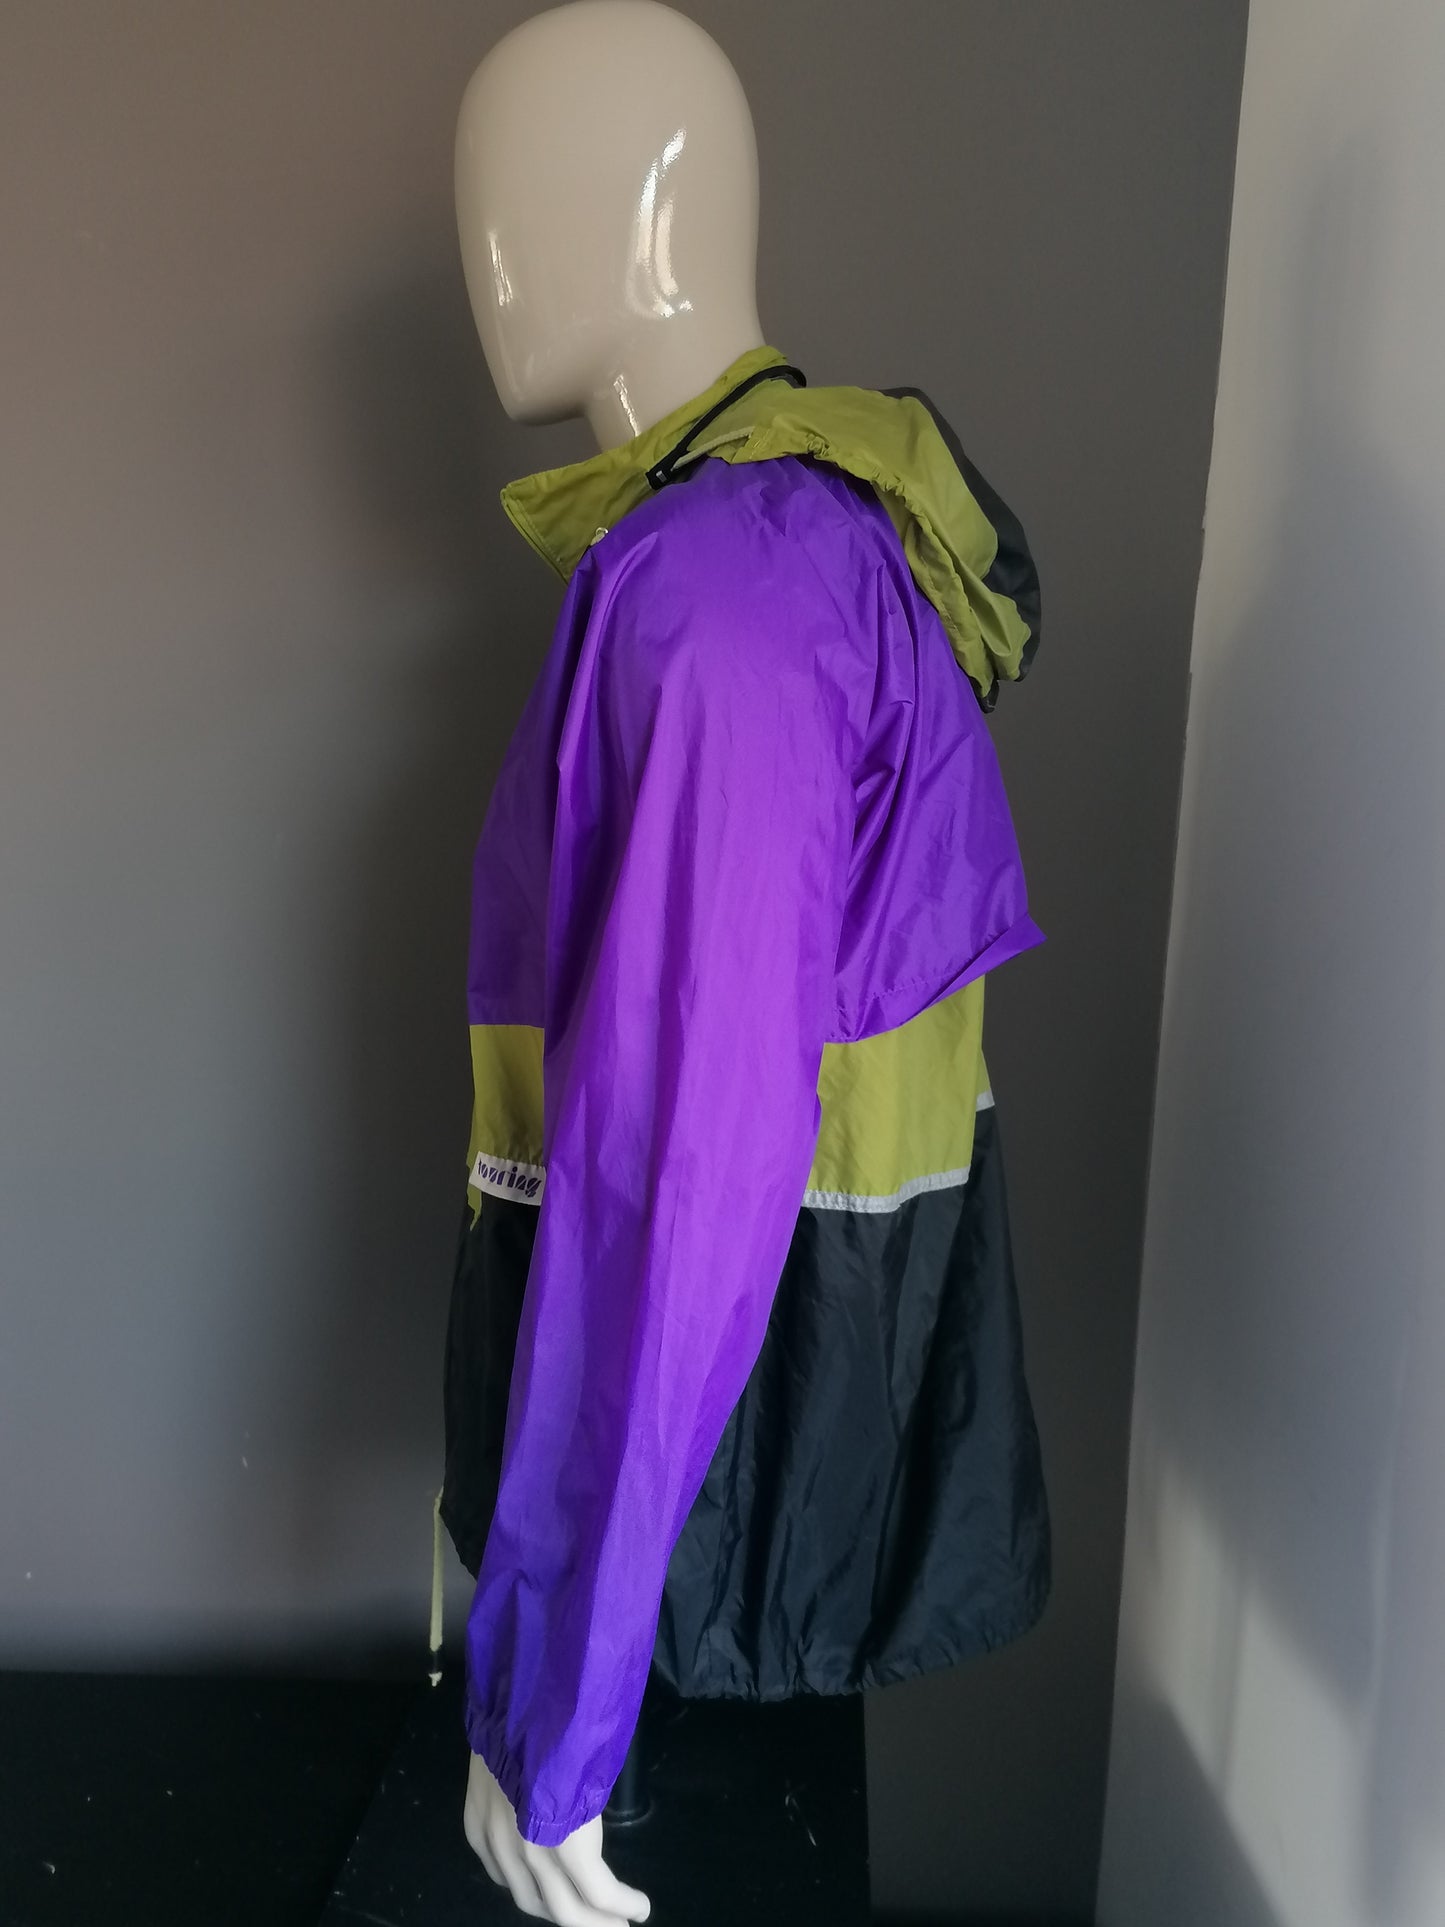 Suéter deportivo retro vintage / gato del viento. Negro verde púrpura. Tamaño XXL / 2XL